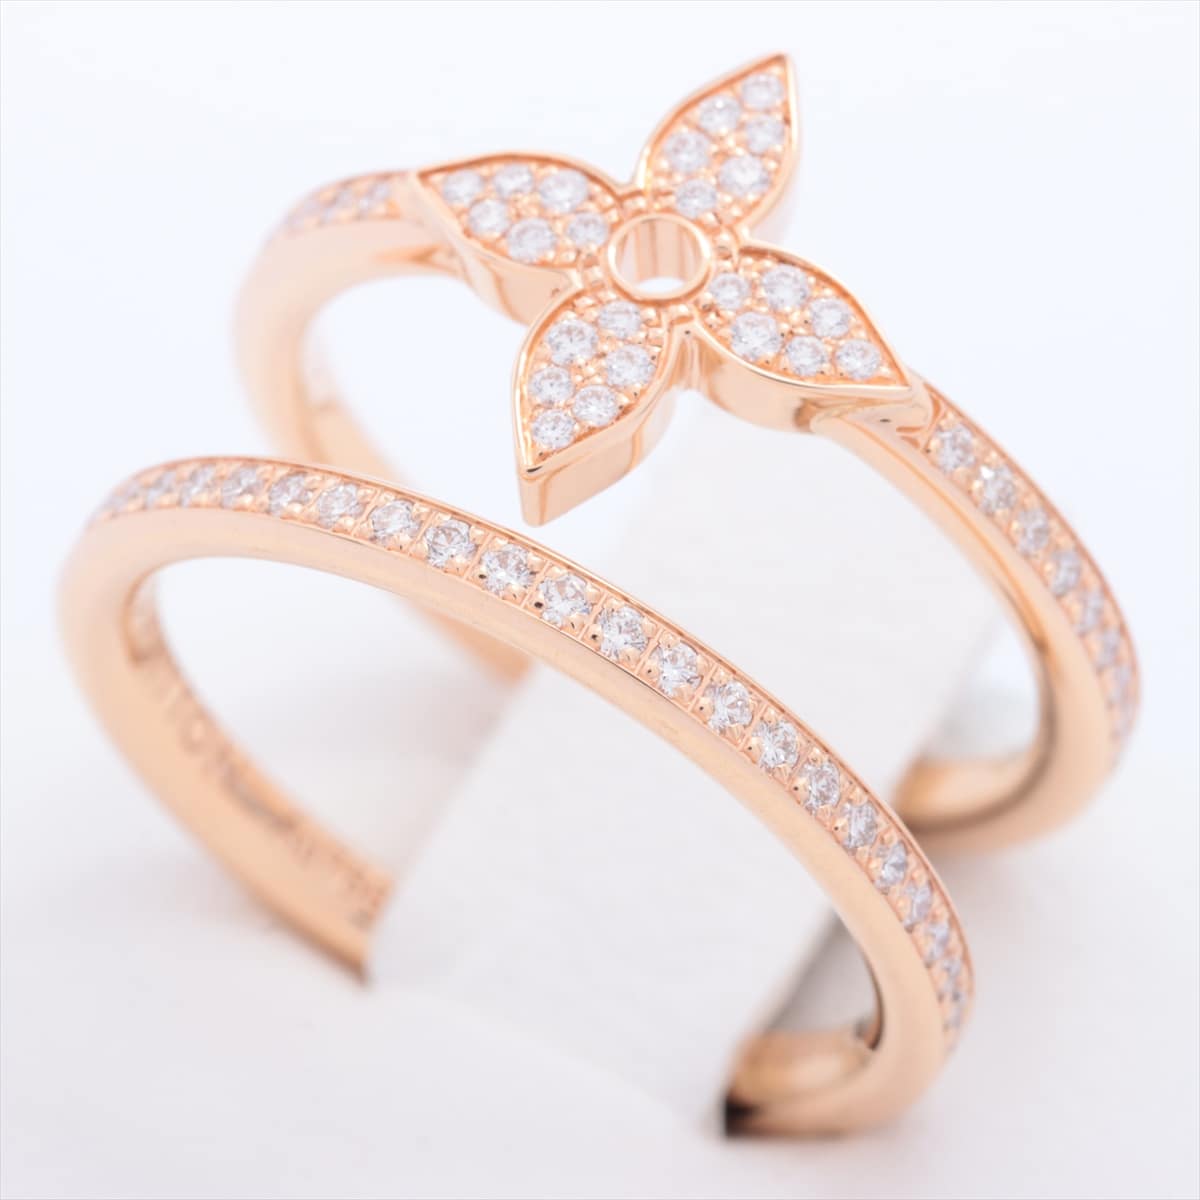 Louis Vuitton Berg Idylle Blossom Diamon diamond rings 750 PG 5.6g 51